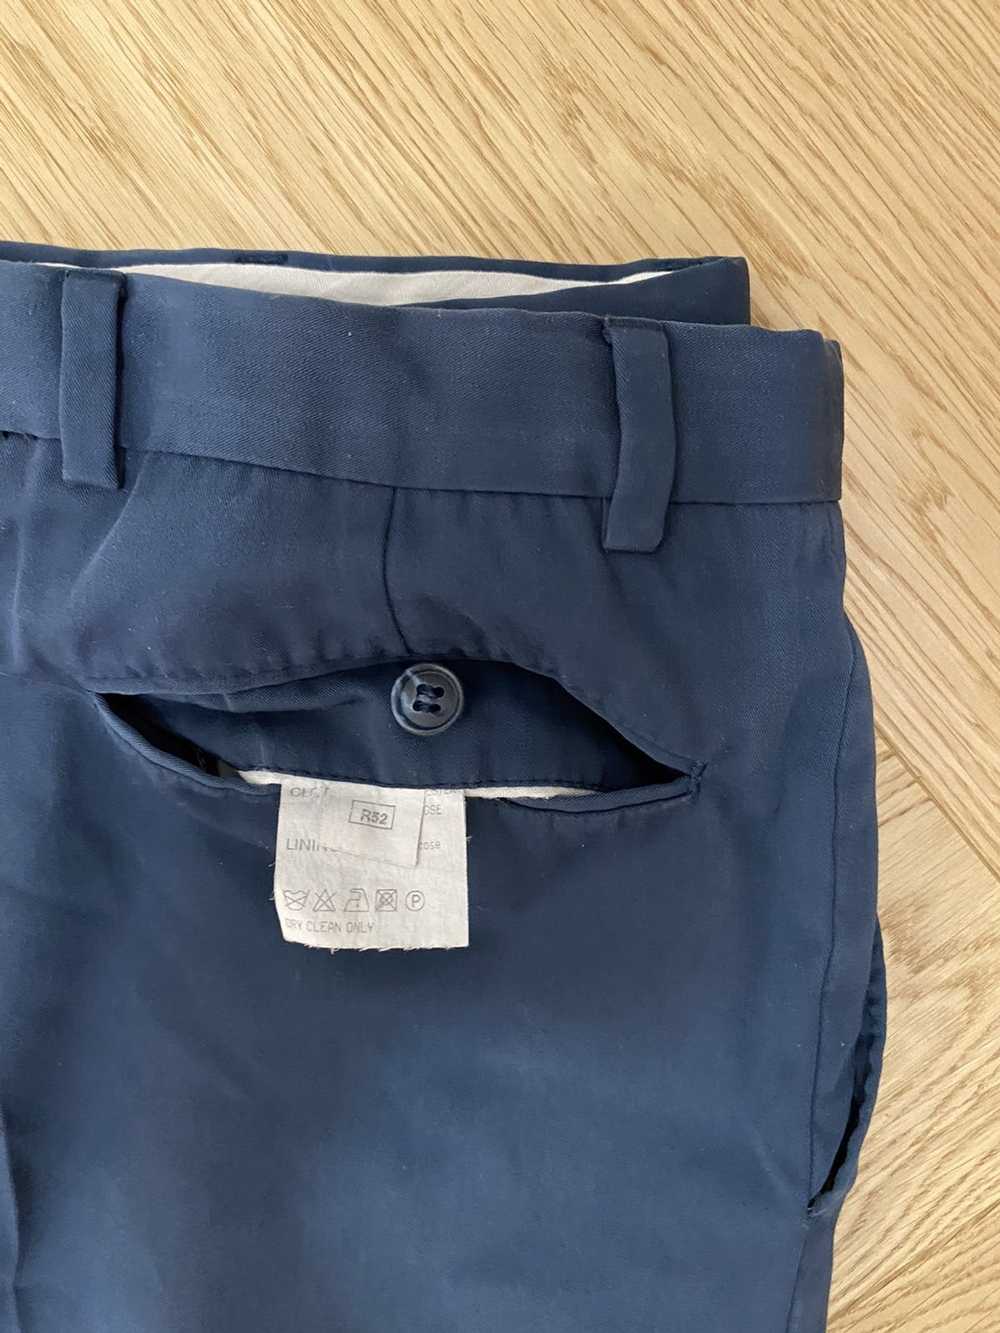 Yves Saint Laurent Yvessaintlaurent trousers - image 4